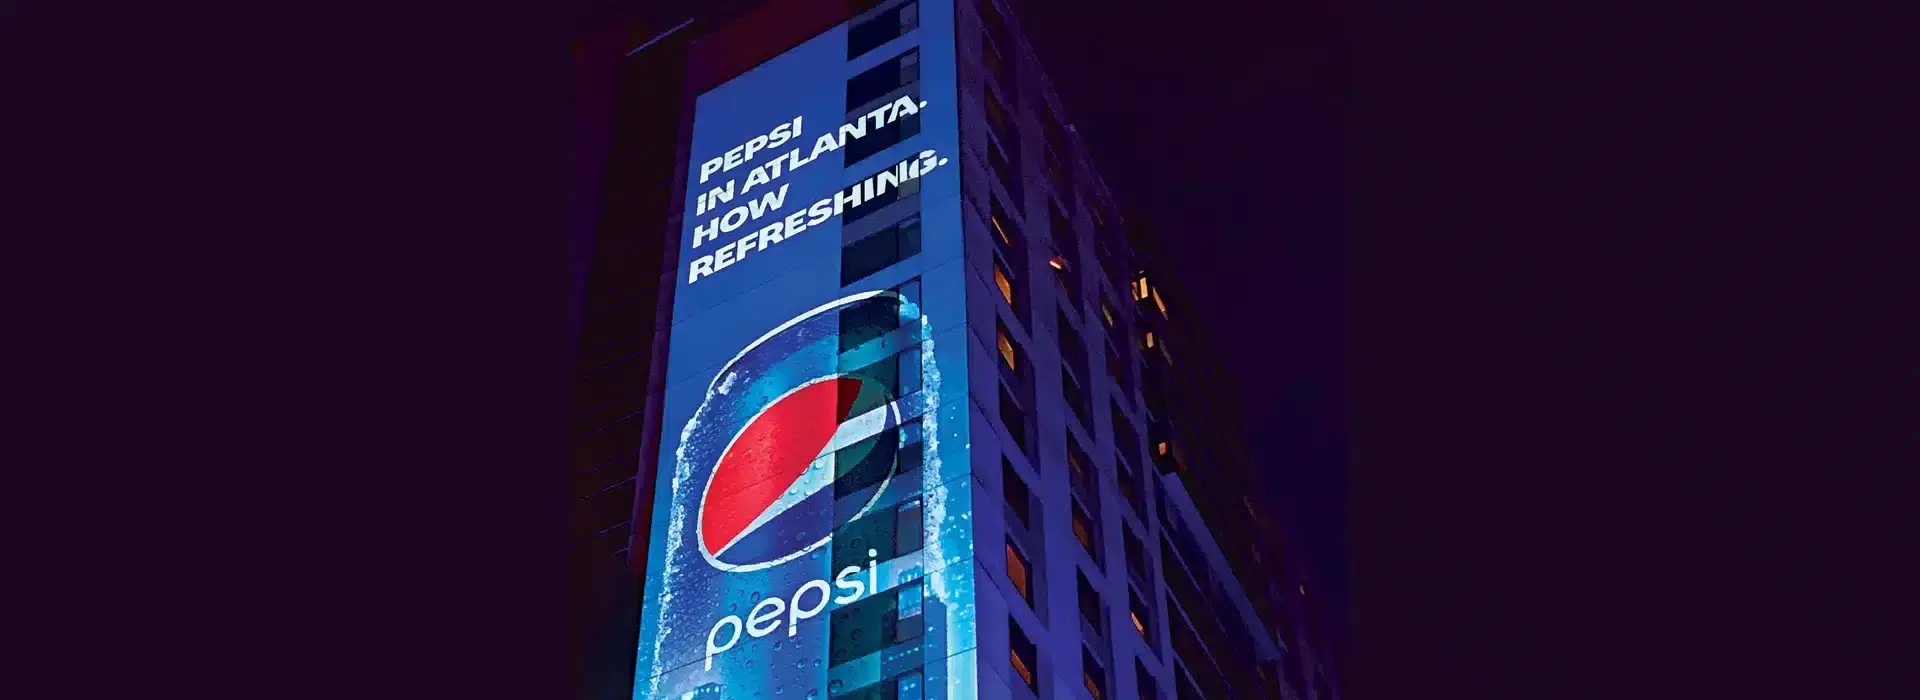 Pepsi, Atlanta Pro AV